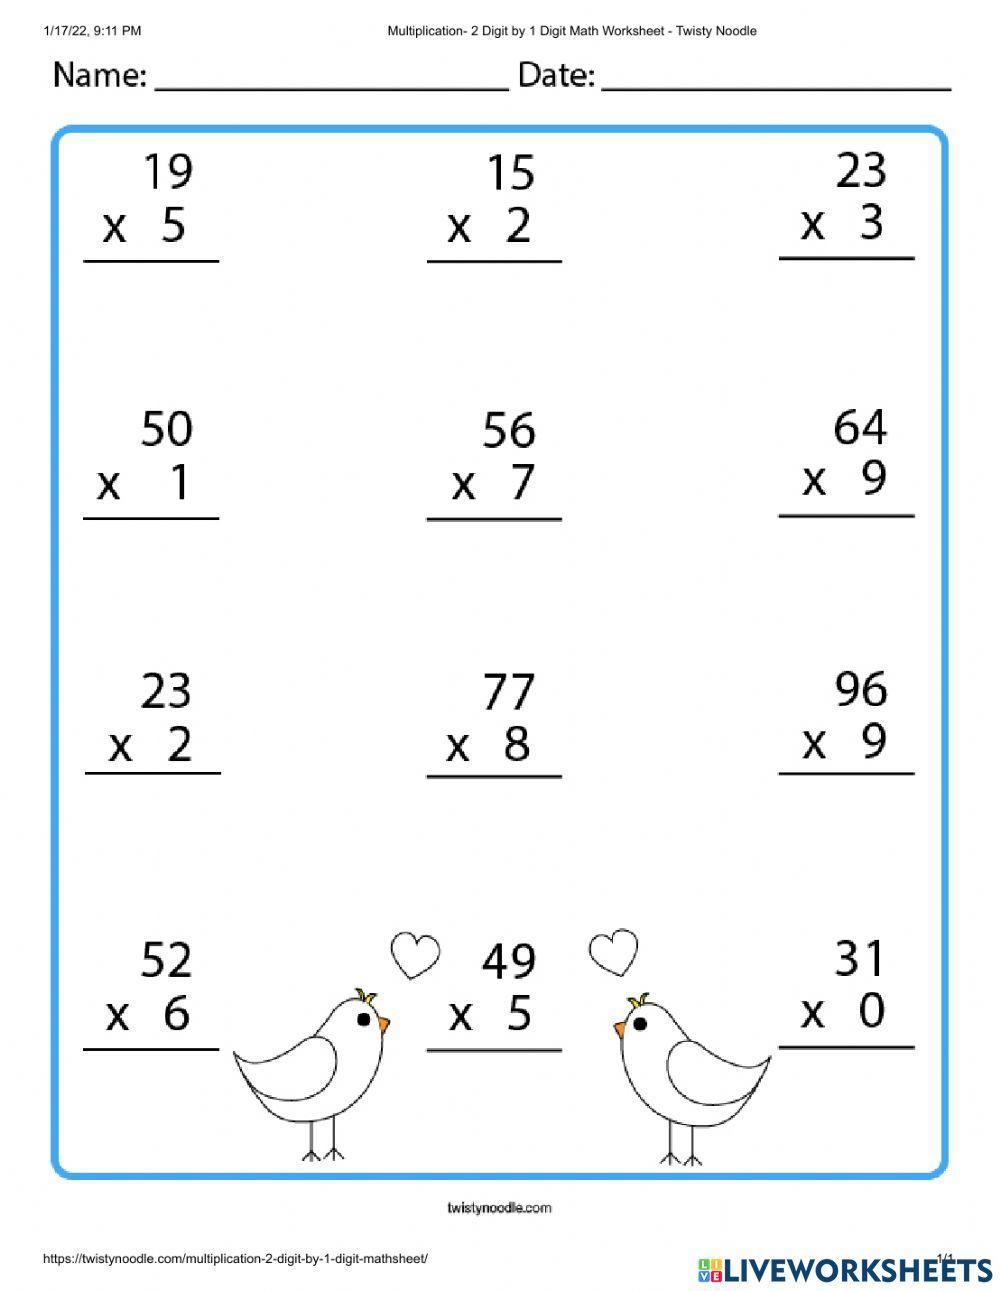 Multiplication 2 Digit by 1 digit